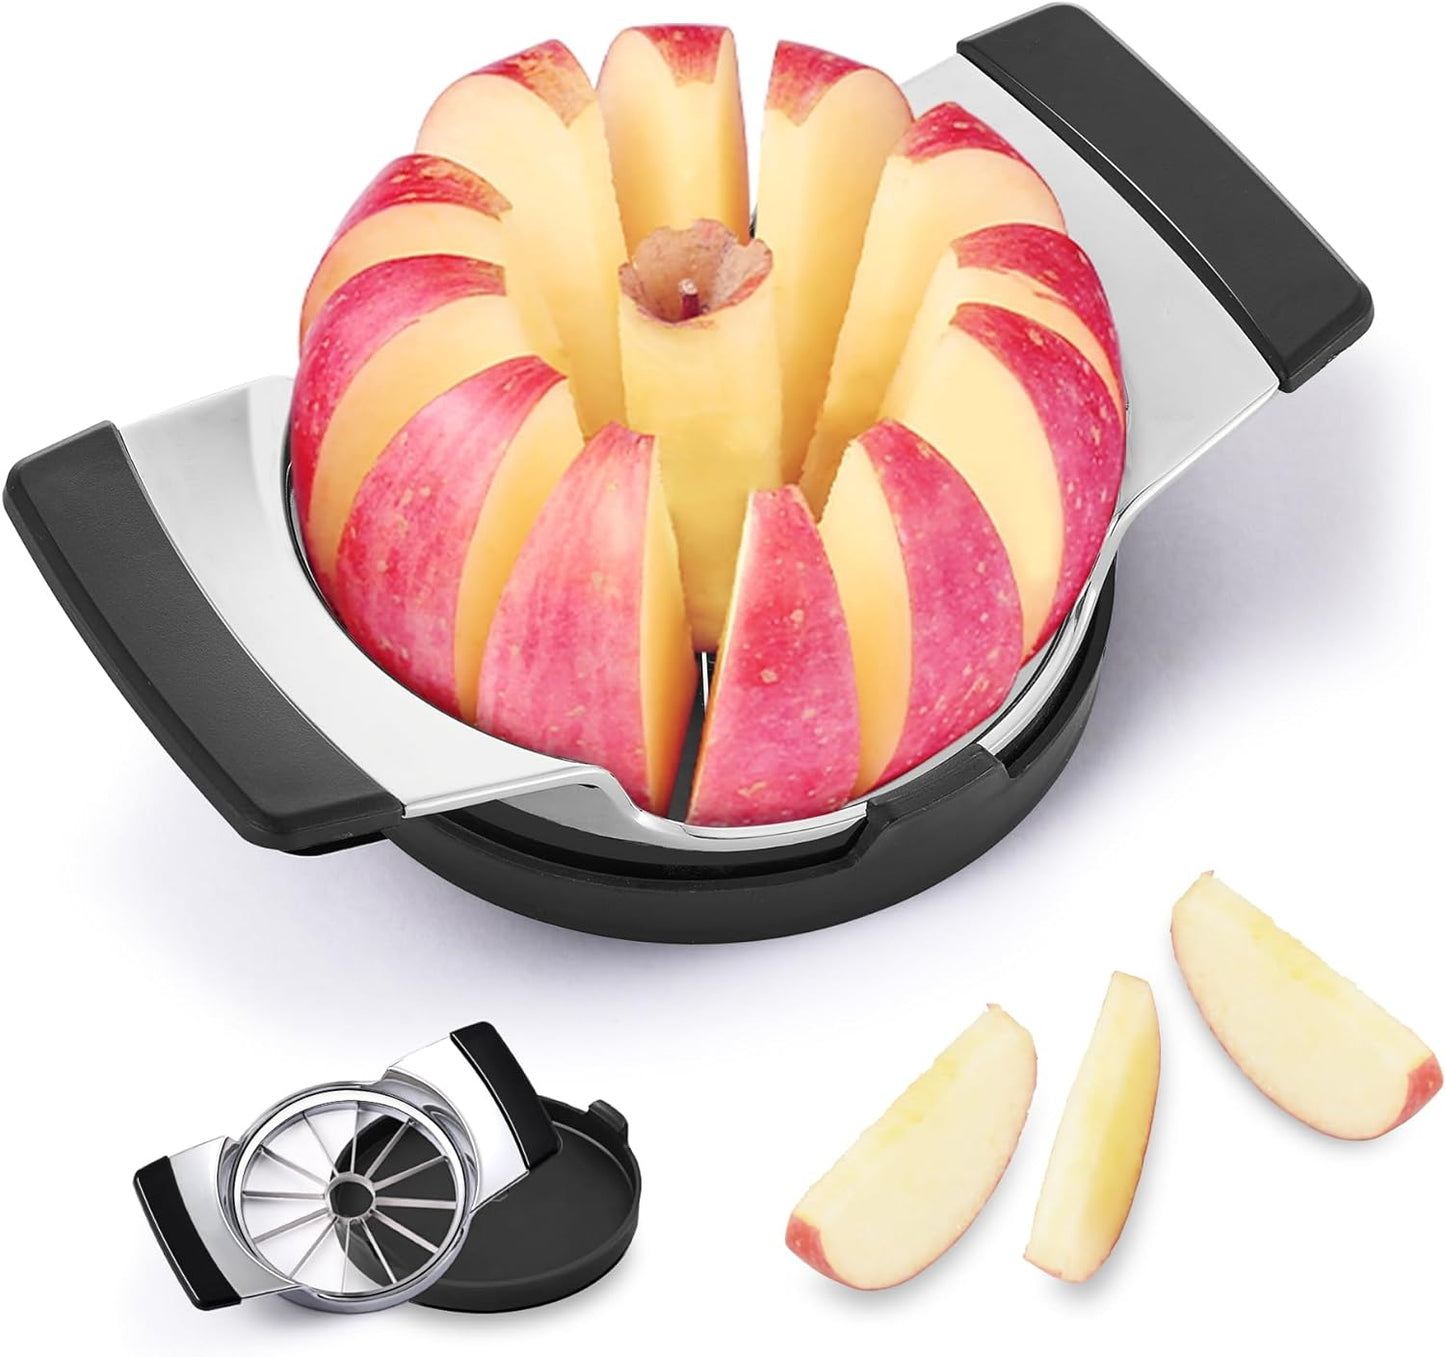 KD Fruit Slicer with 12 Blades: Apples, Pears  Kitchen Slicer Tool